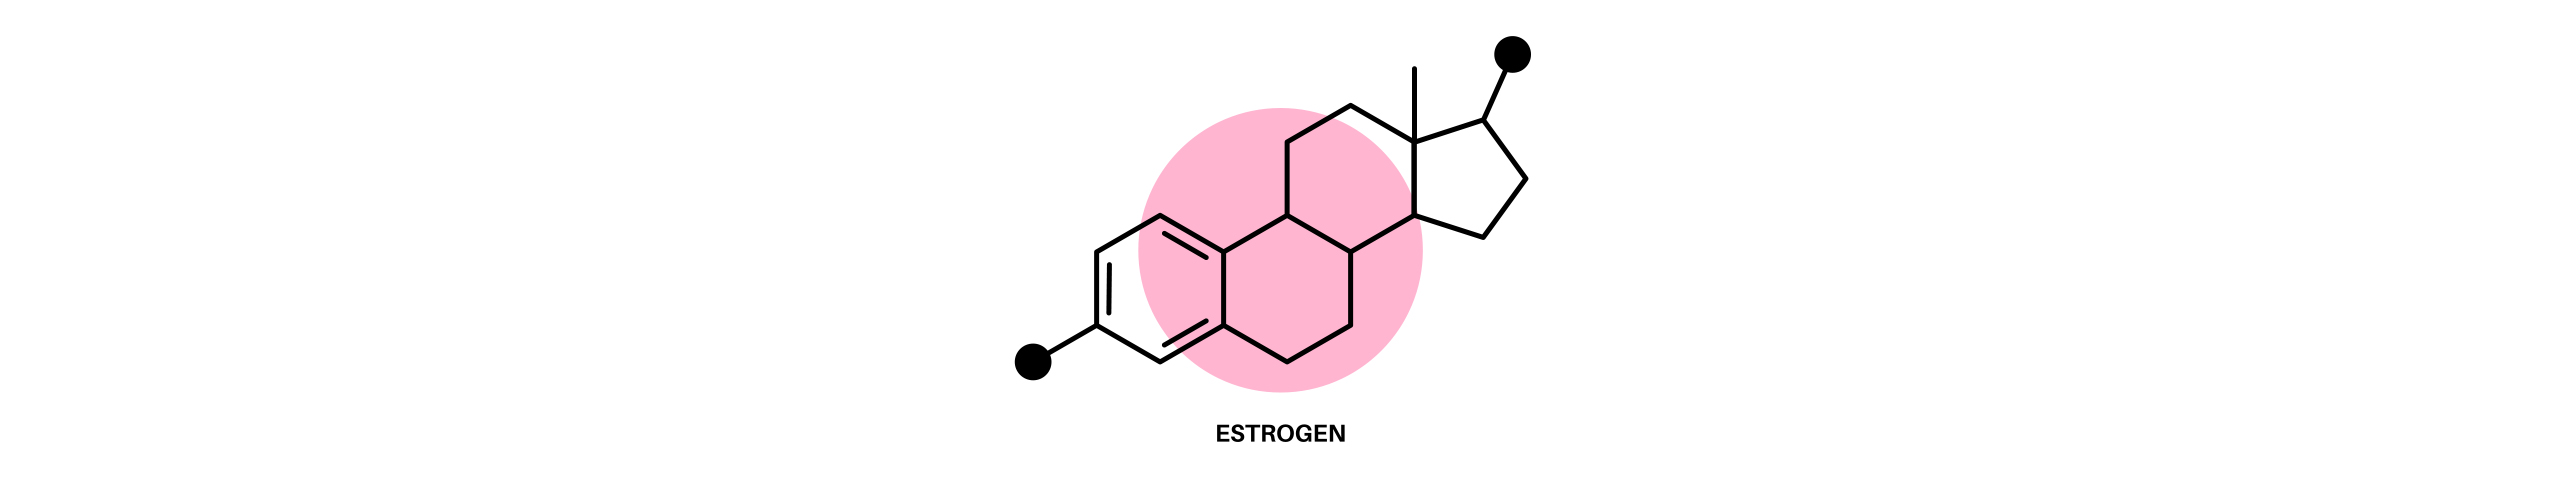 Daling oestrogeen levert risico's op